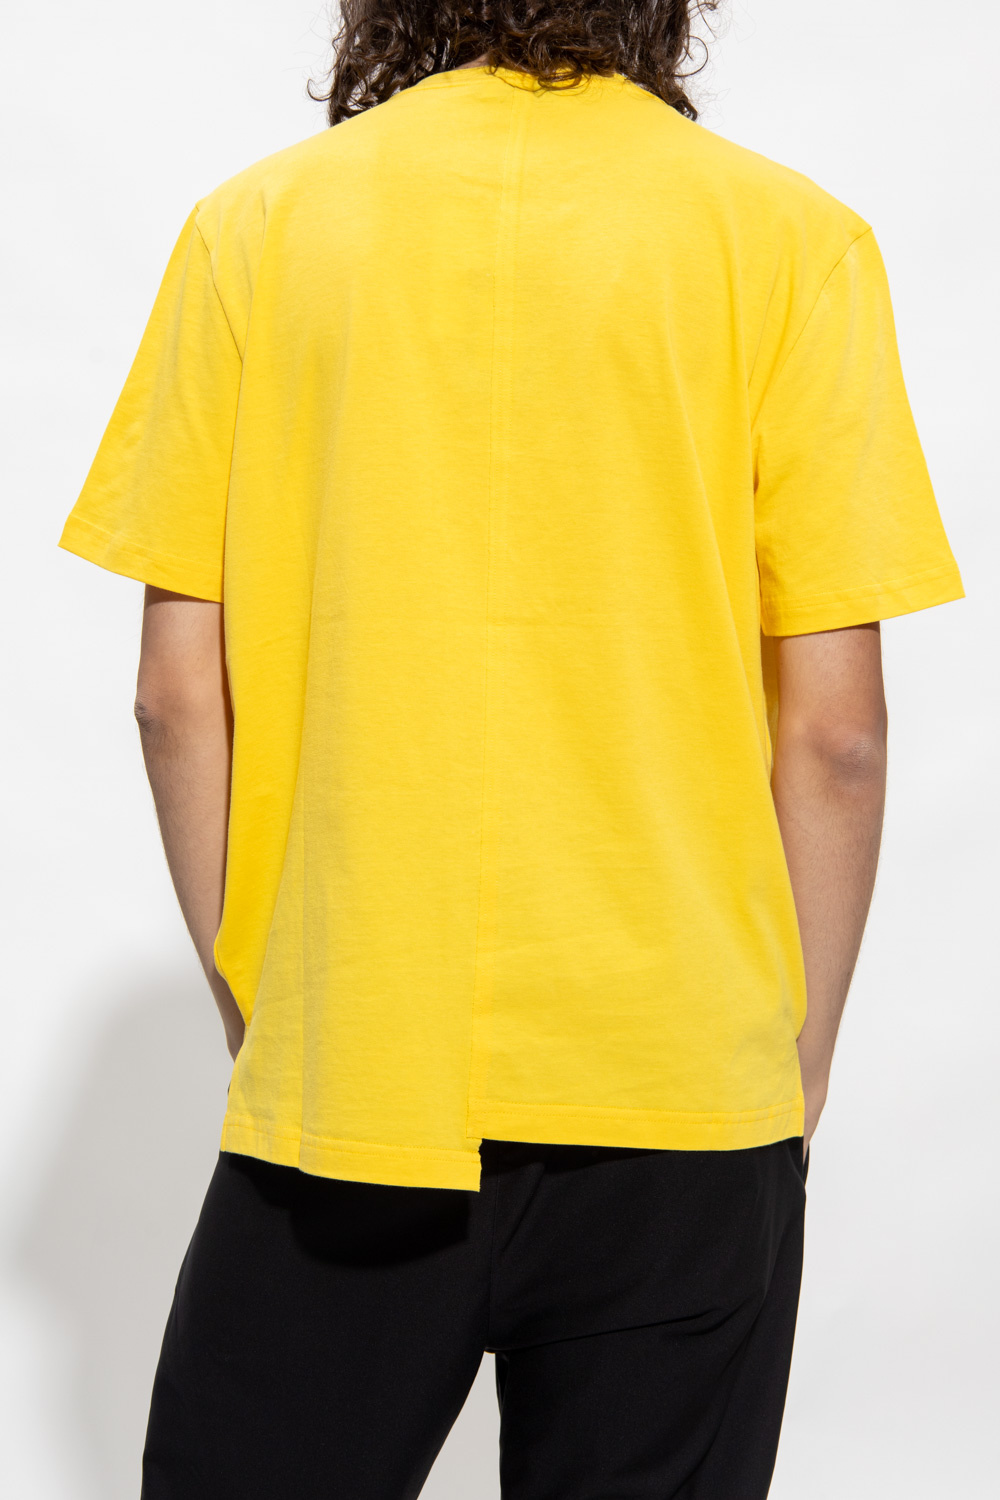 Lanvin kremowy t-shirt bez rękawów